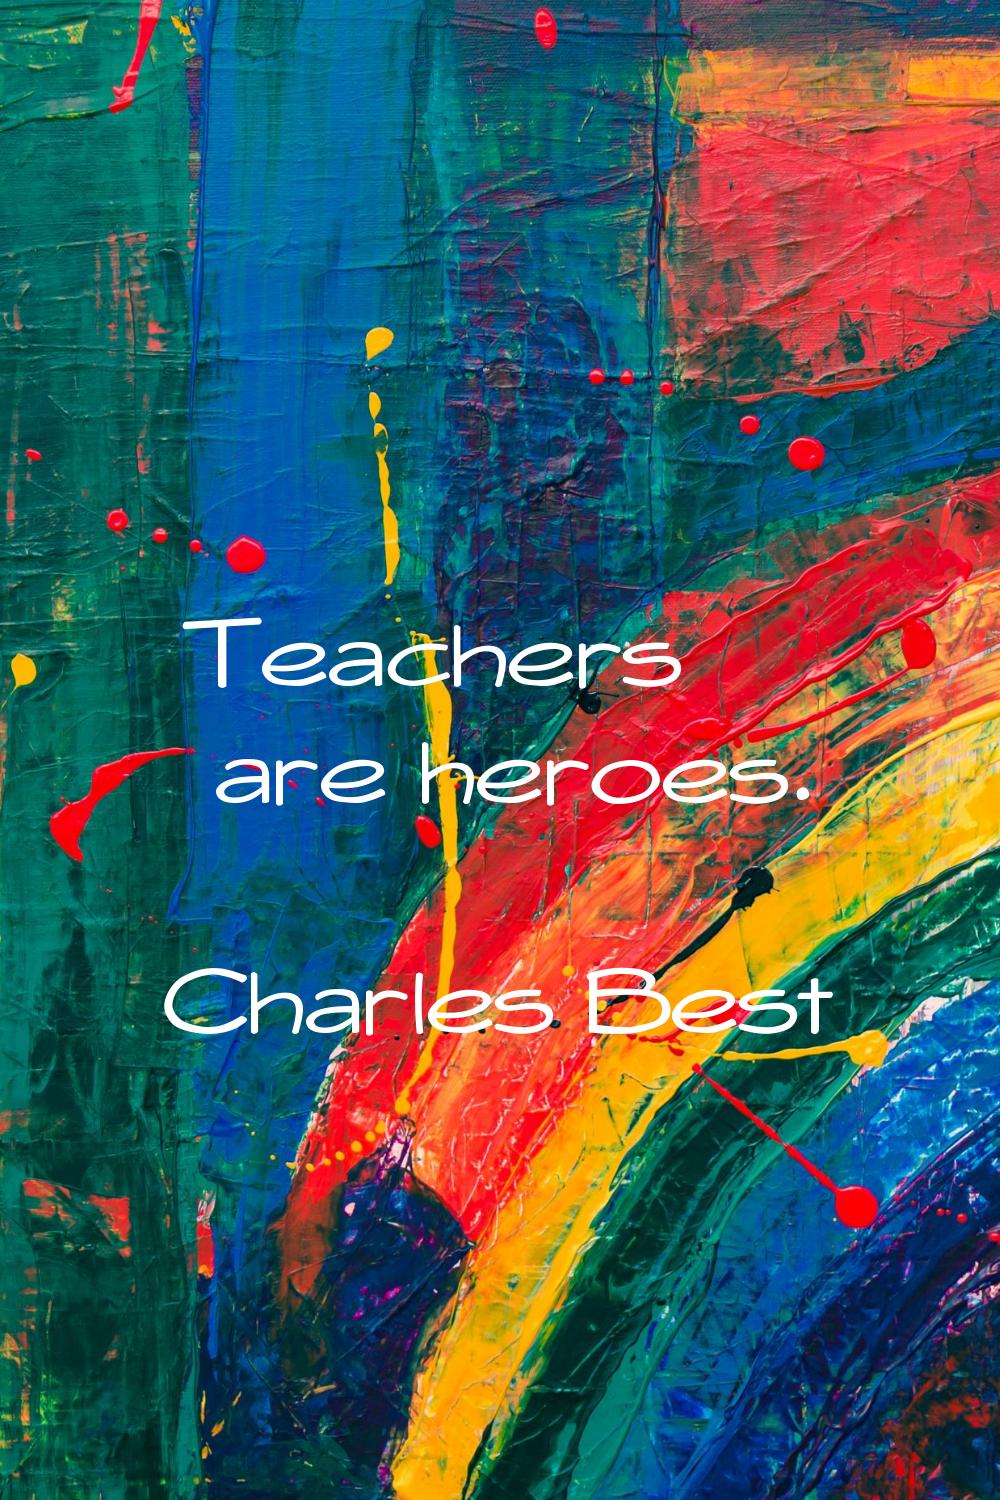 Teachers are heroes.